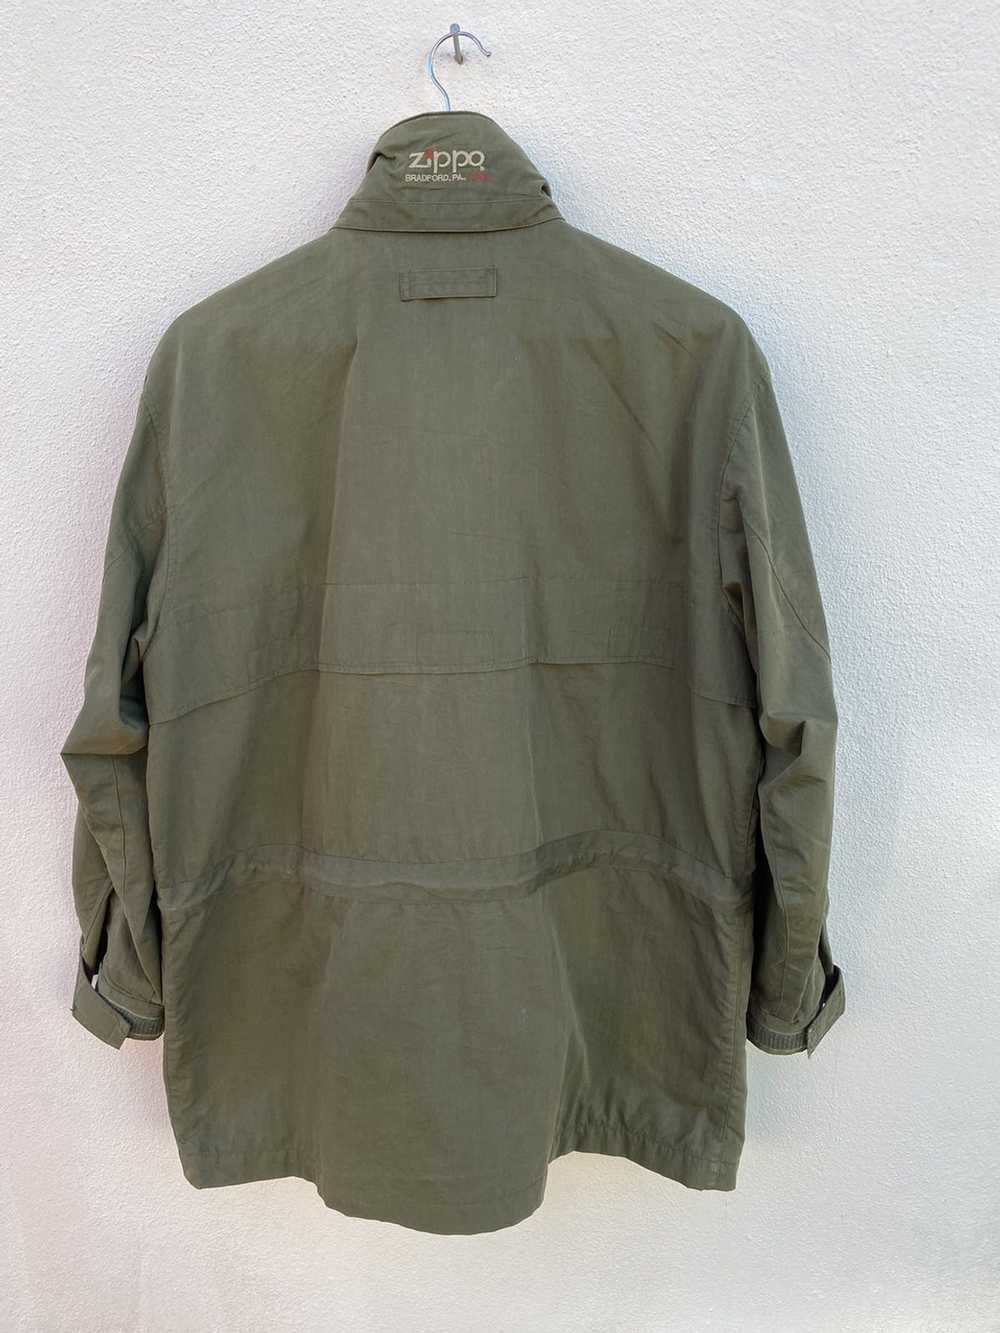 Vintage × Zippo Vintage zippo army parkas jacket - image 3